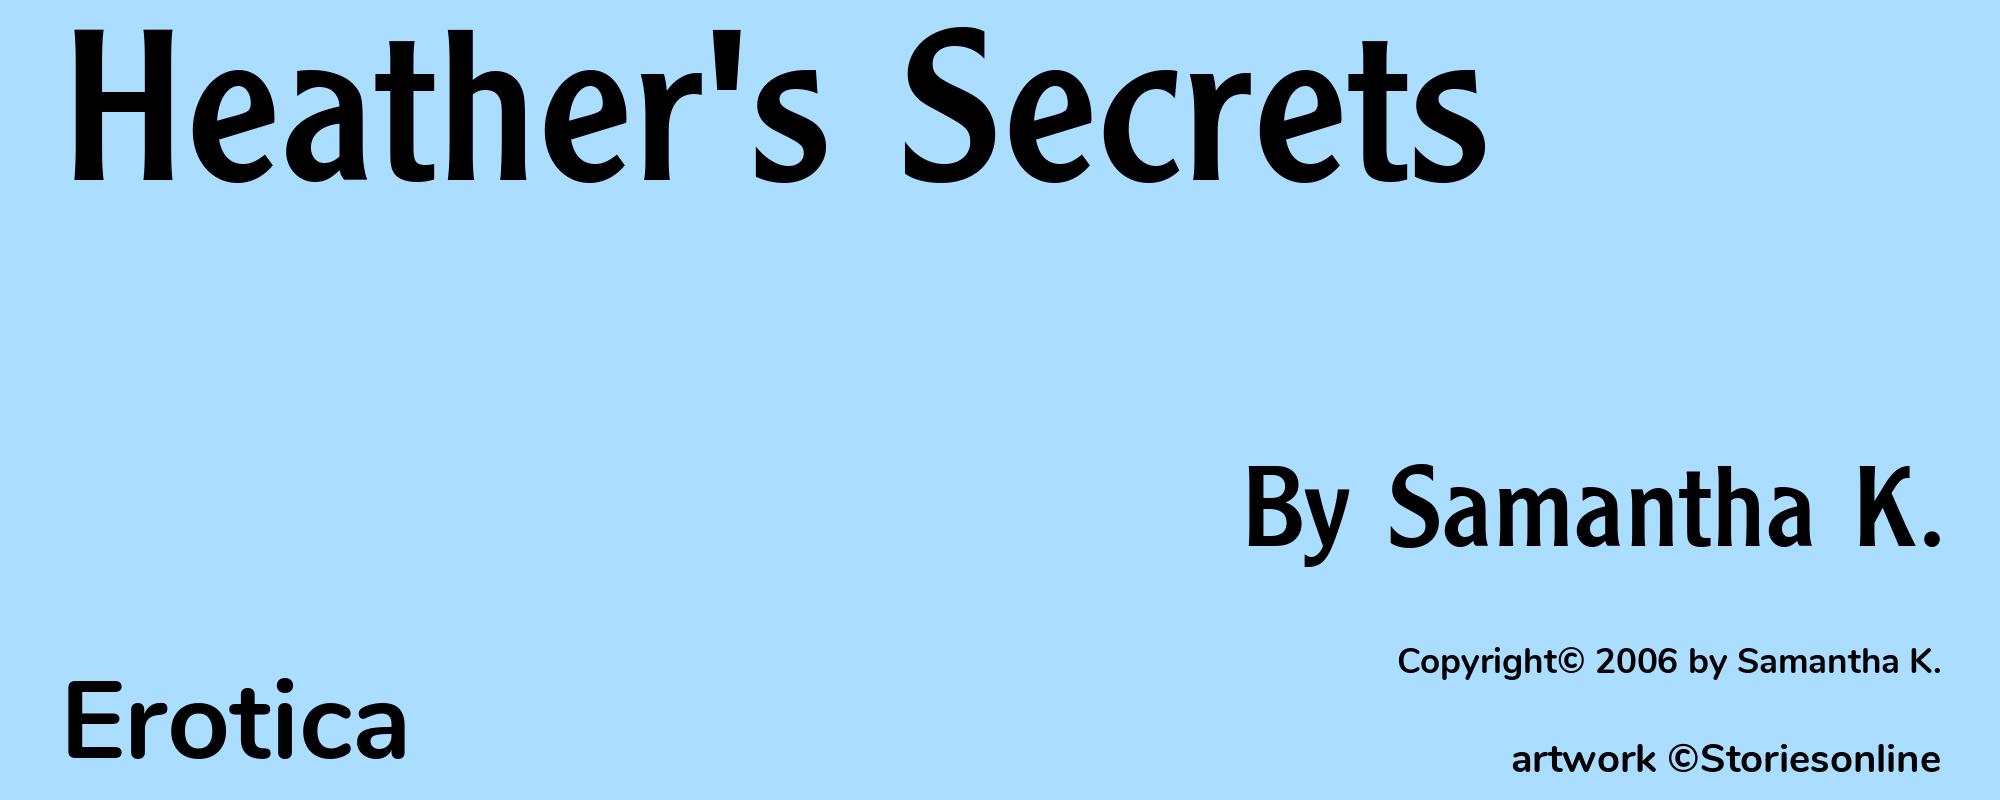 Heather's Secrets - Cover